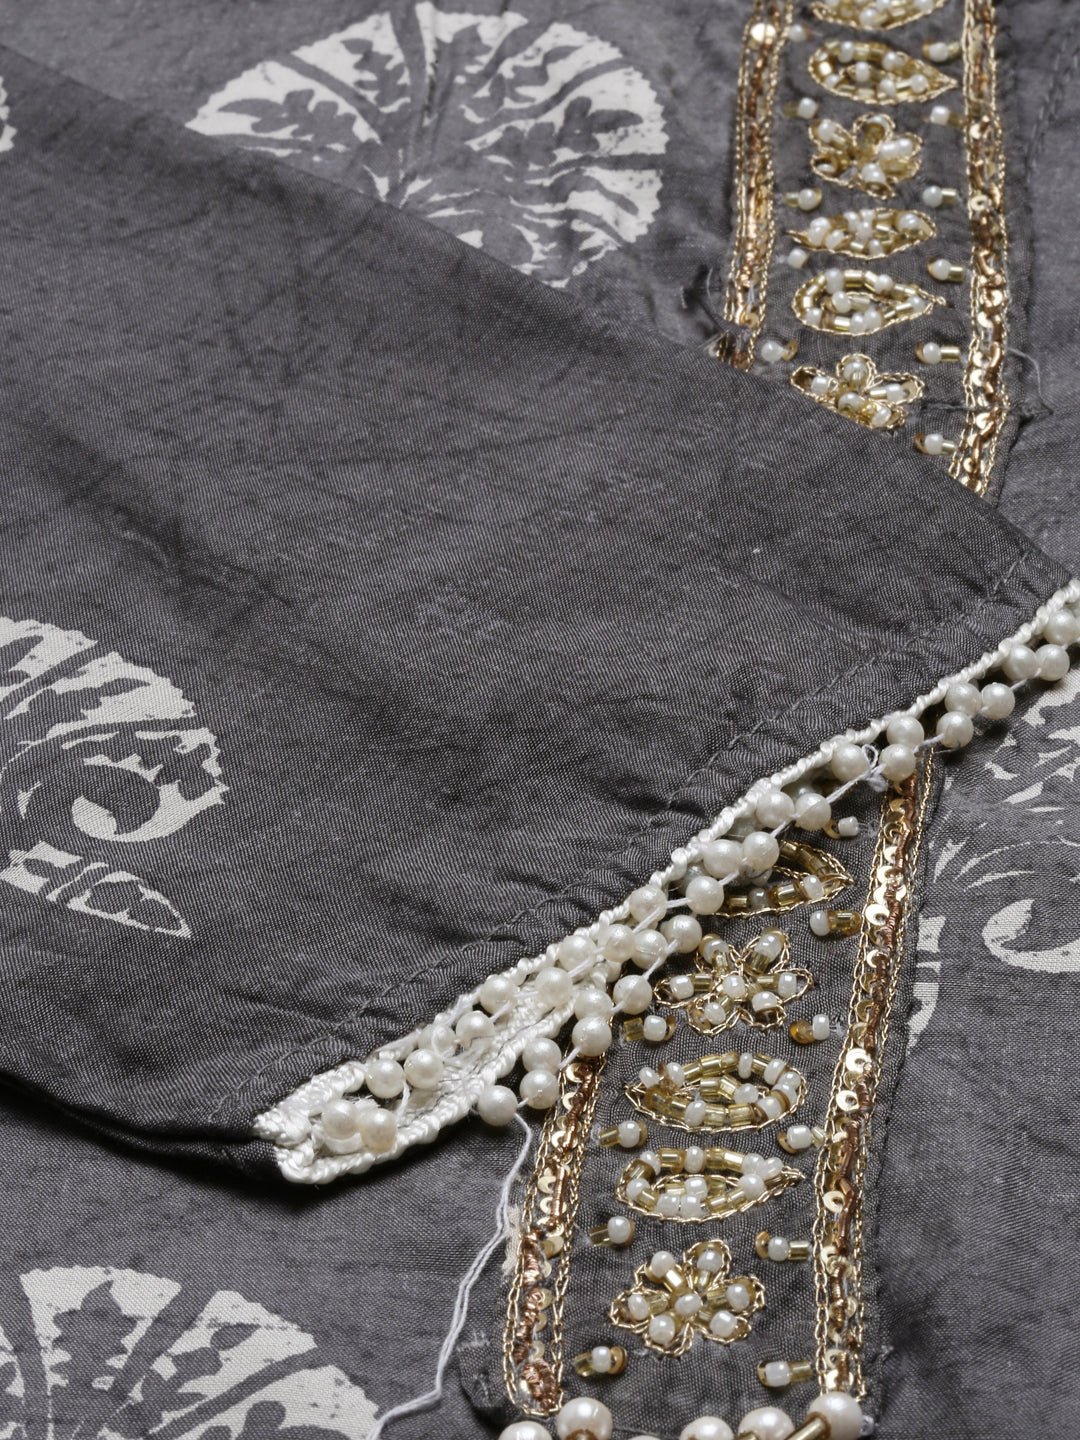 Neeru's Grey Color Muslin Fabric Tunic